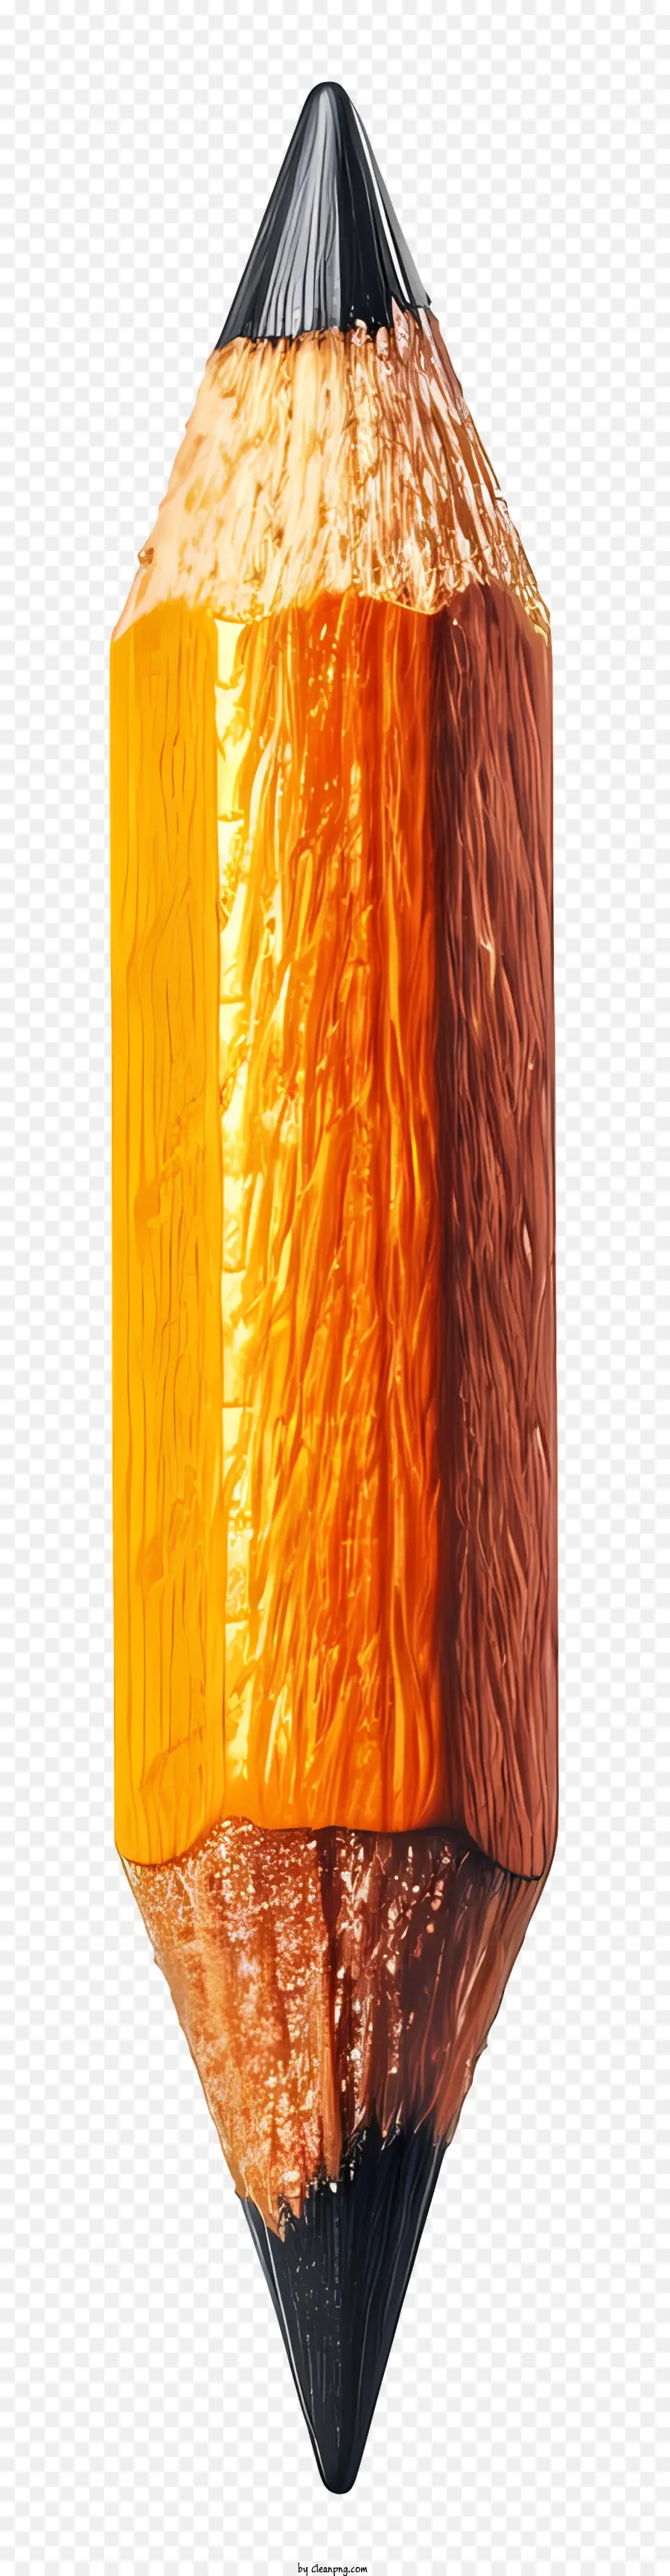 pencil colorful pencil illusion of depth texture orange and black color